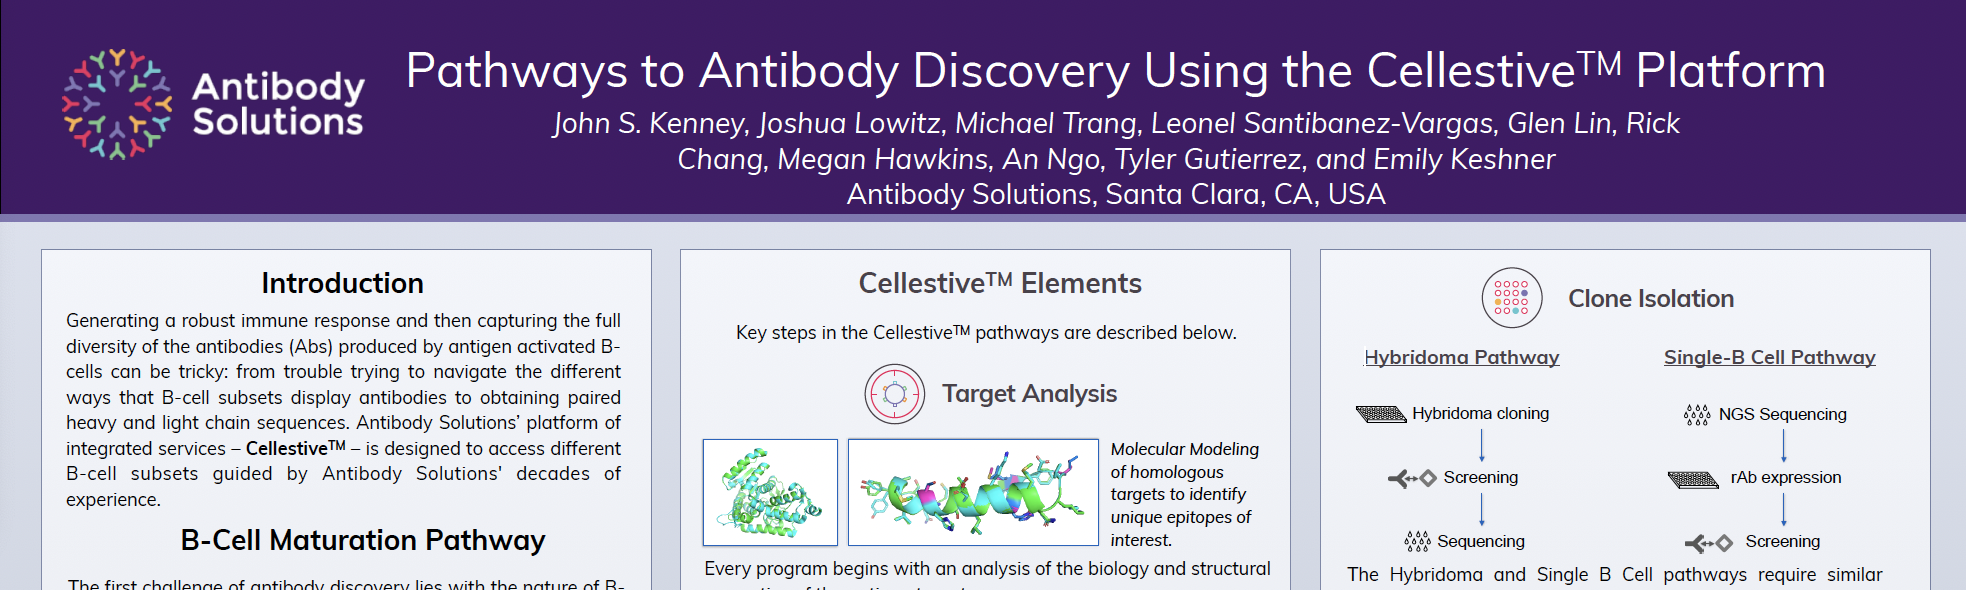 Pathways to Antibody Discovery Using the Cellestive™ Platform